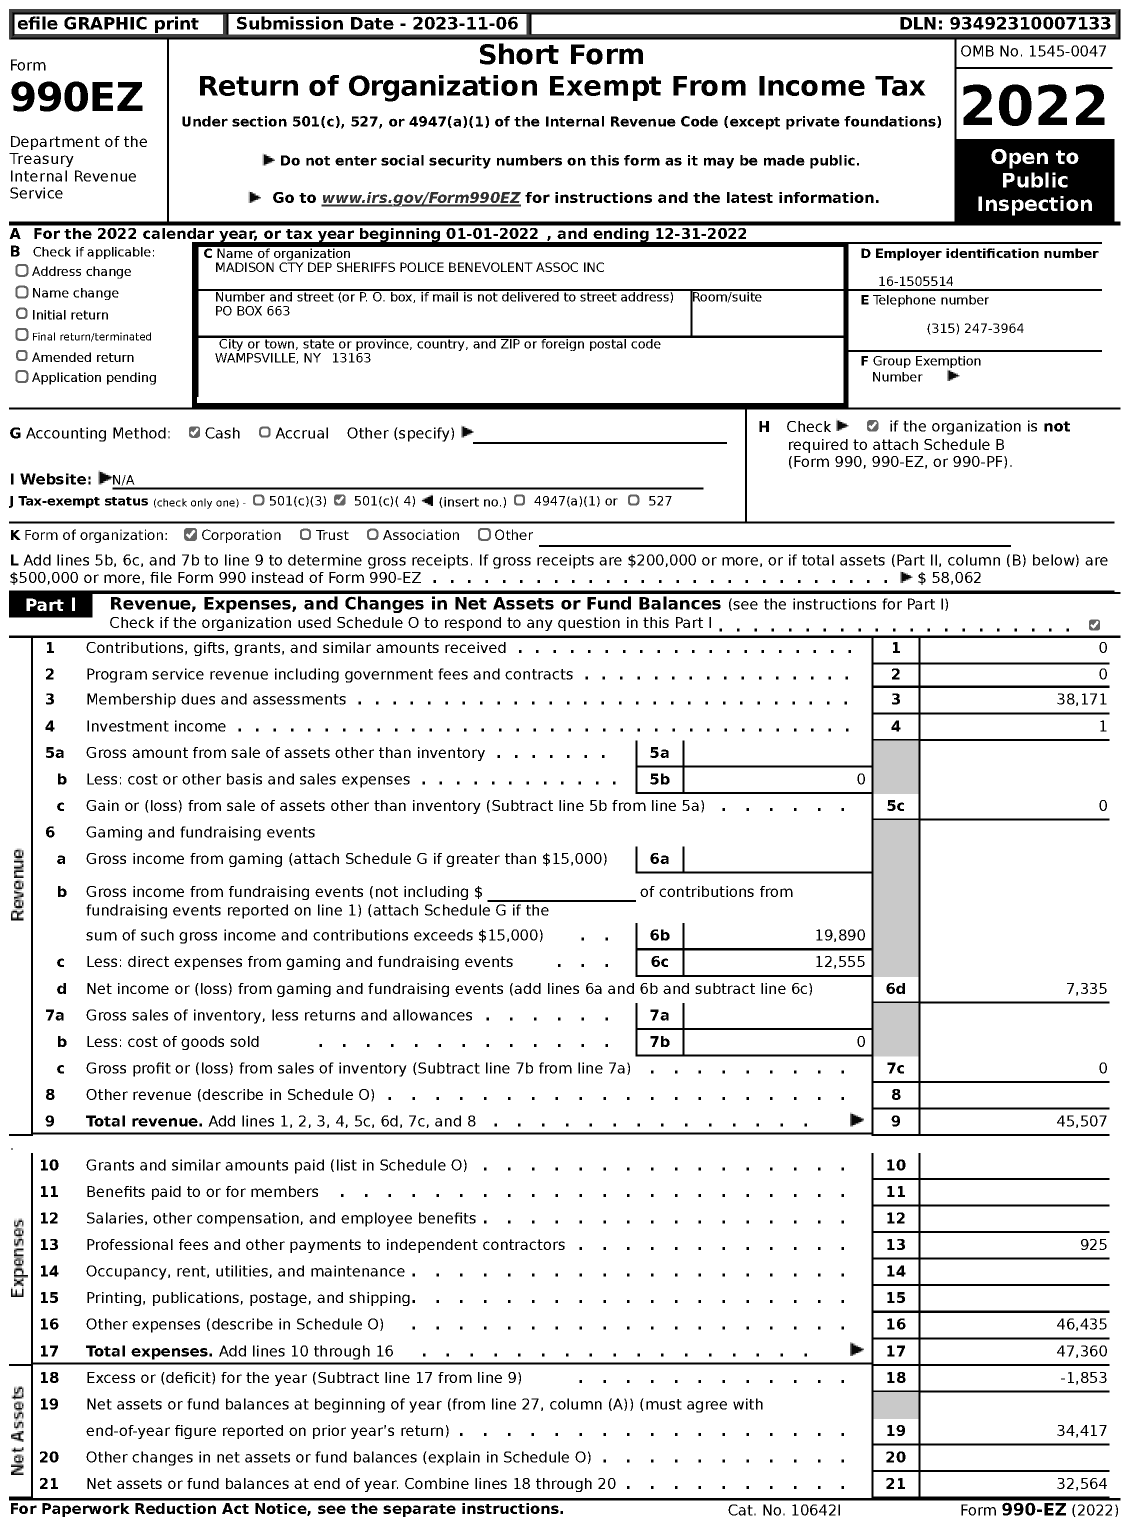 Image of first page of 2022 Form 990EZ for Madison Cty Dep Sheriffs Police Benevolent Association